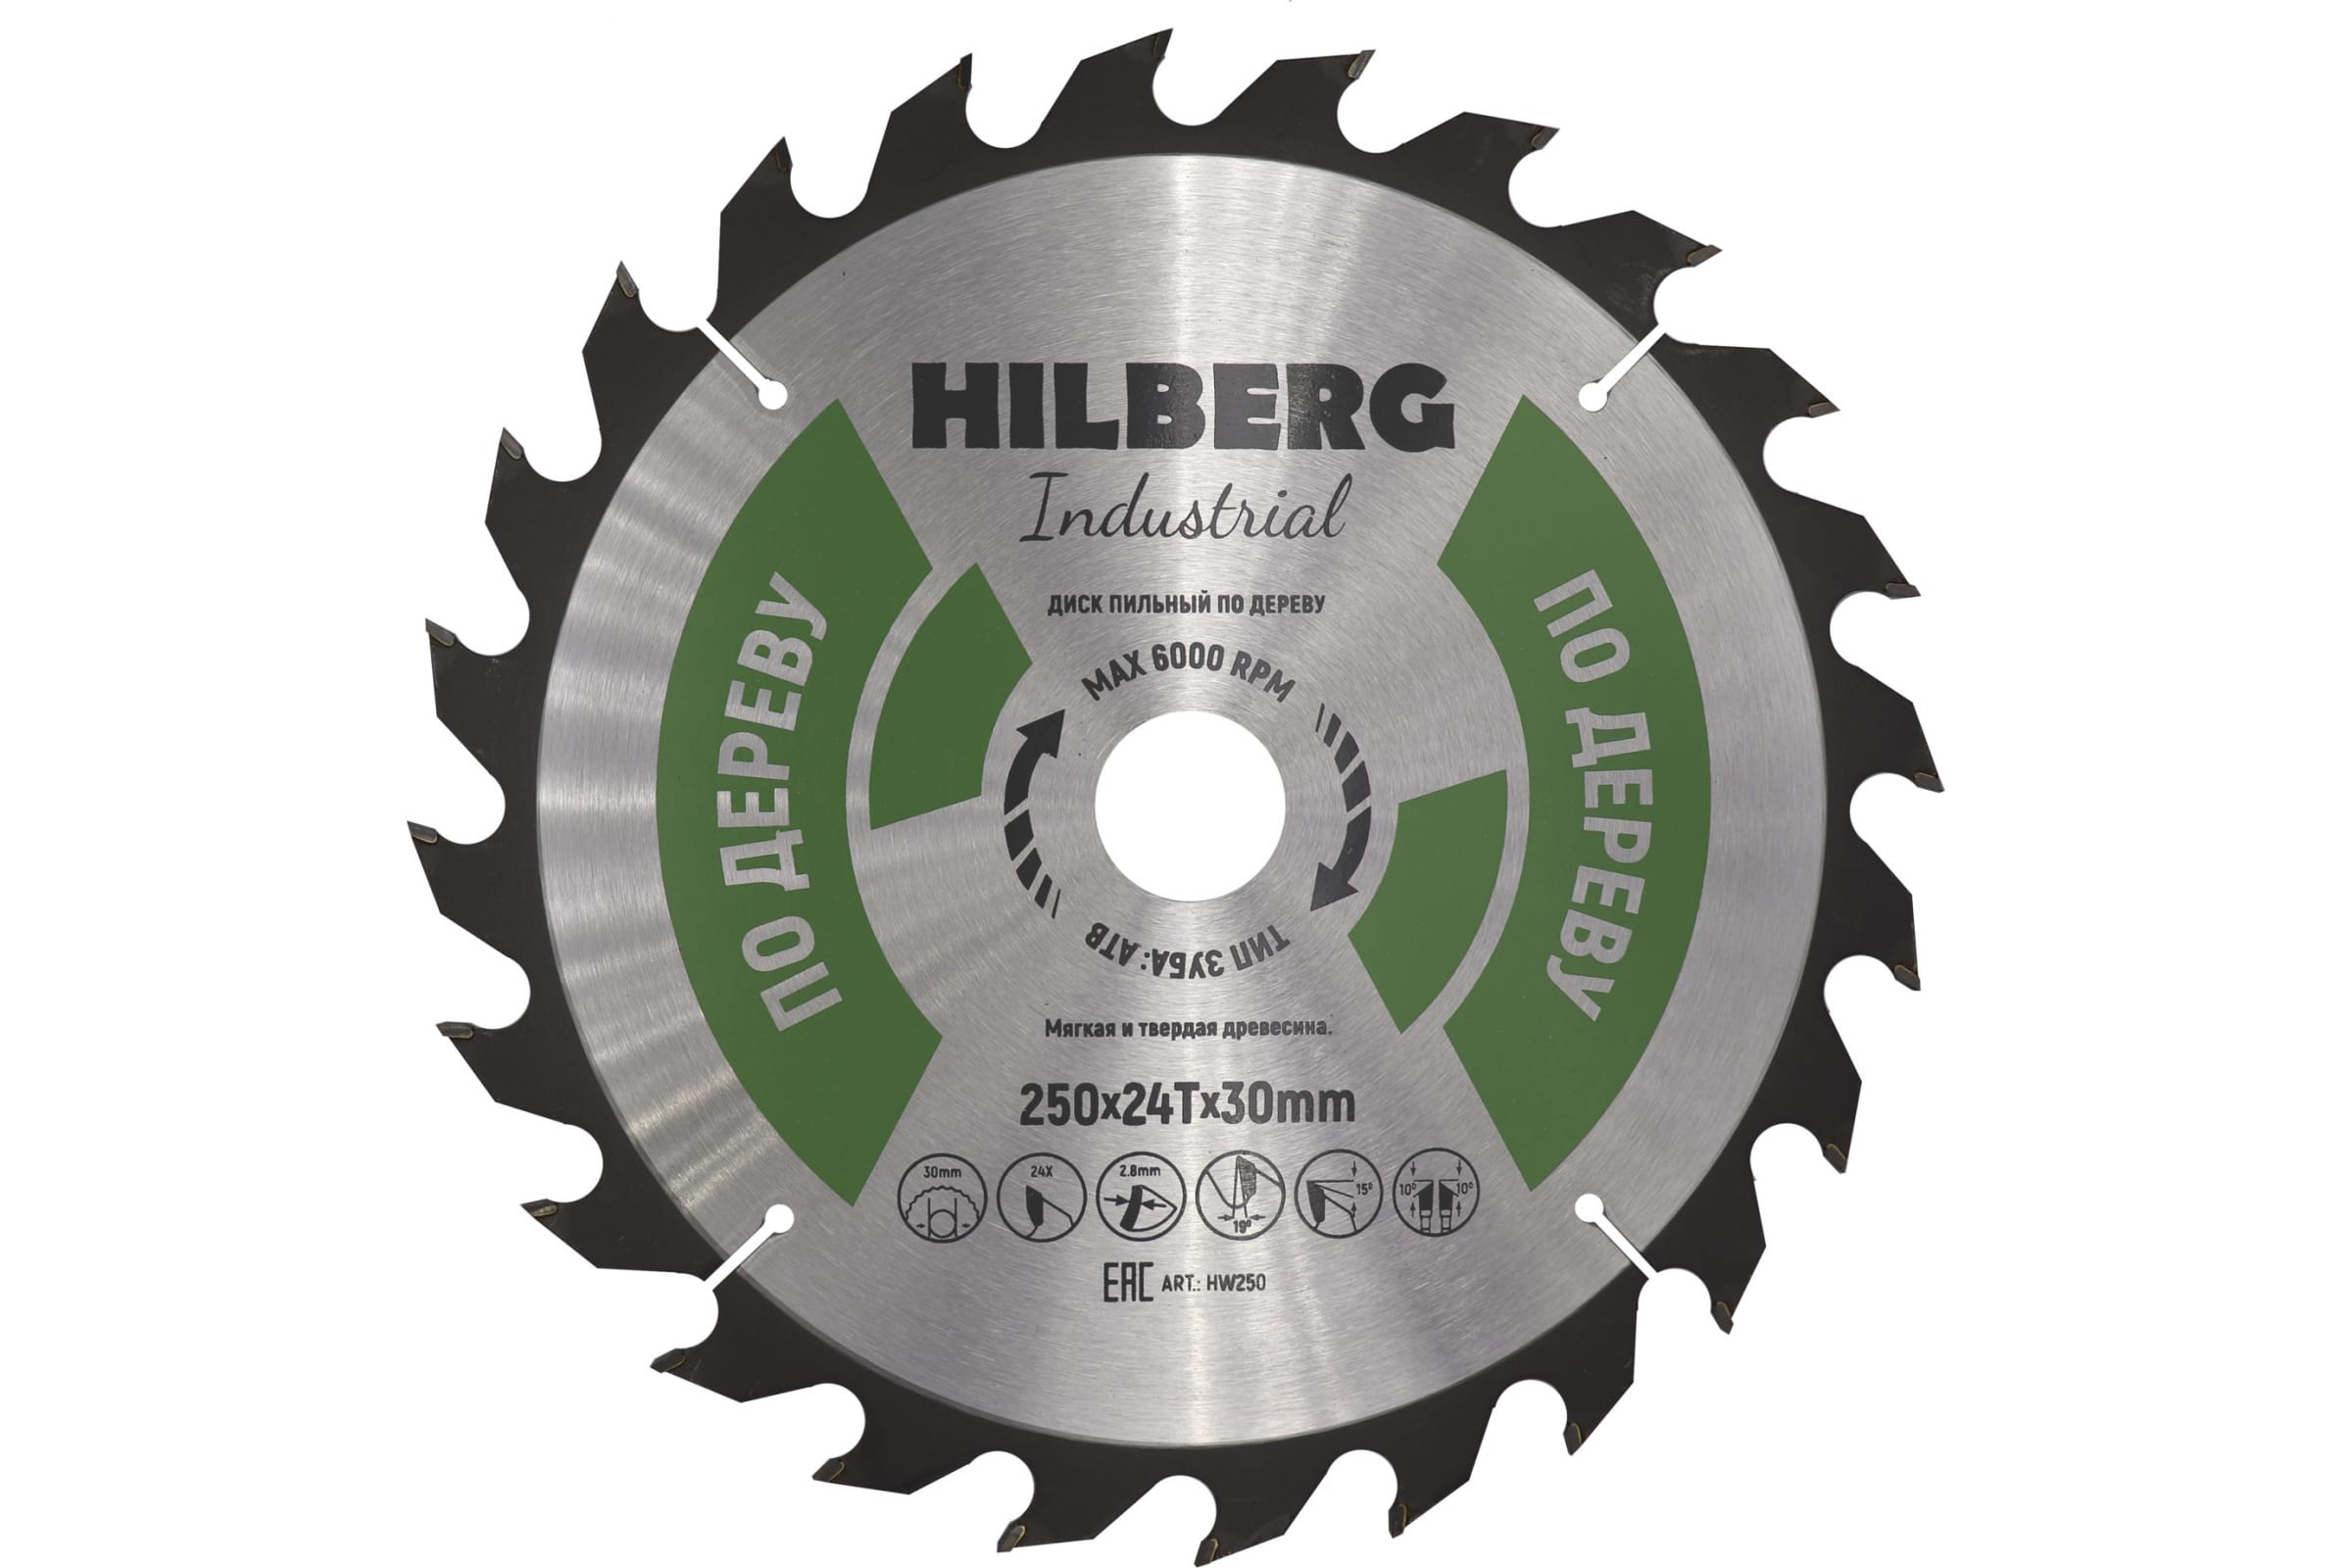 Hilberg Диск пильный Hilberg Industrial Дерево 250x30x24Т HW250